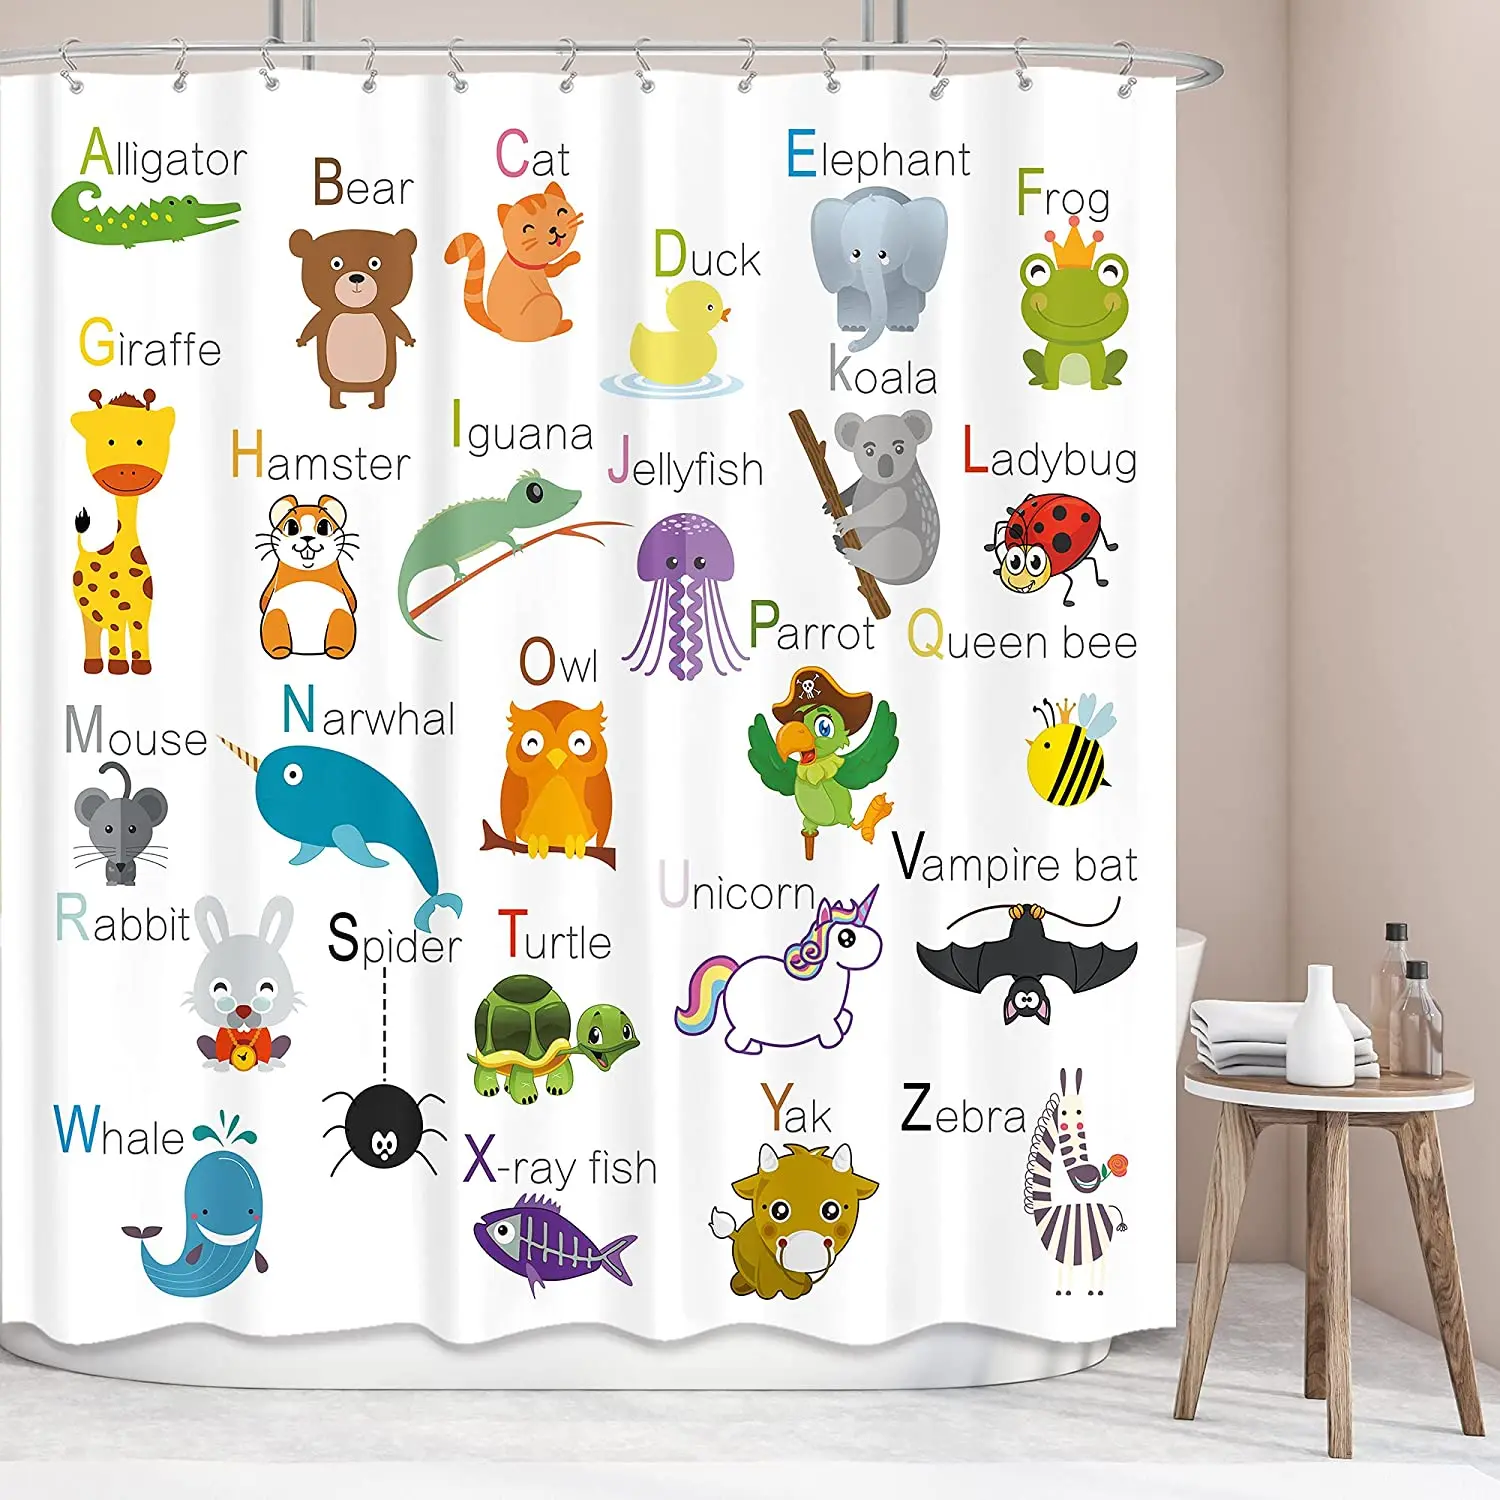 

Cartoon Alphabet Shower Curtain Funny Animal Baby Kids Boy Child Educational Bathroom Curtains Decor Fabric Funny Teaching Words